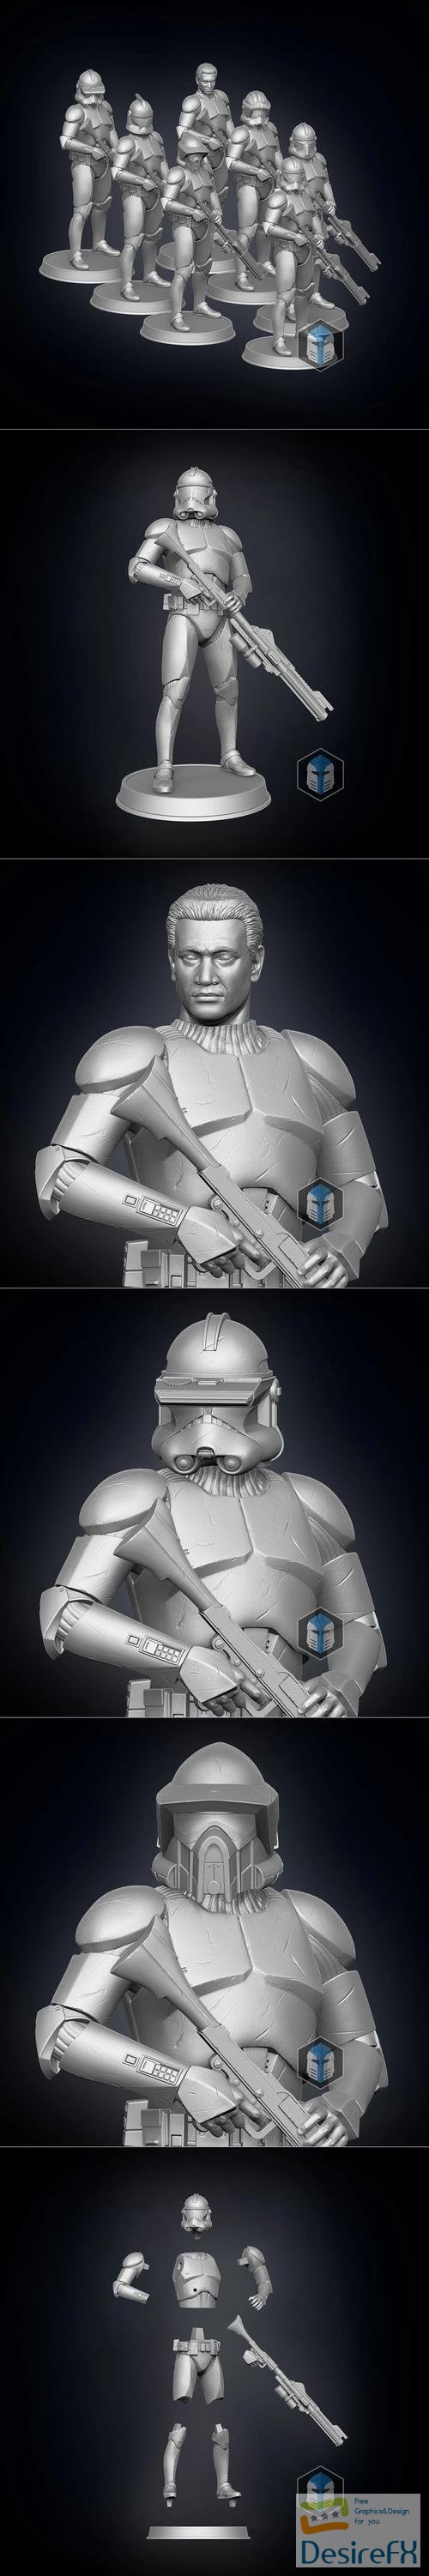 Clone Trooper Figurines - Soldiers – 3D Print